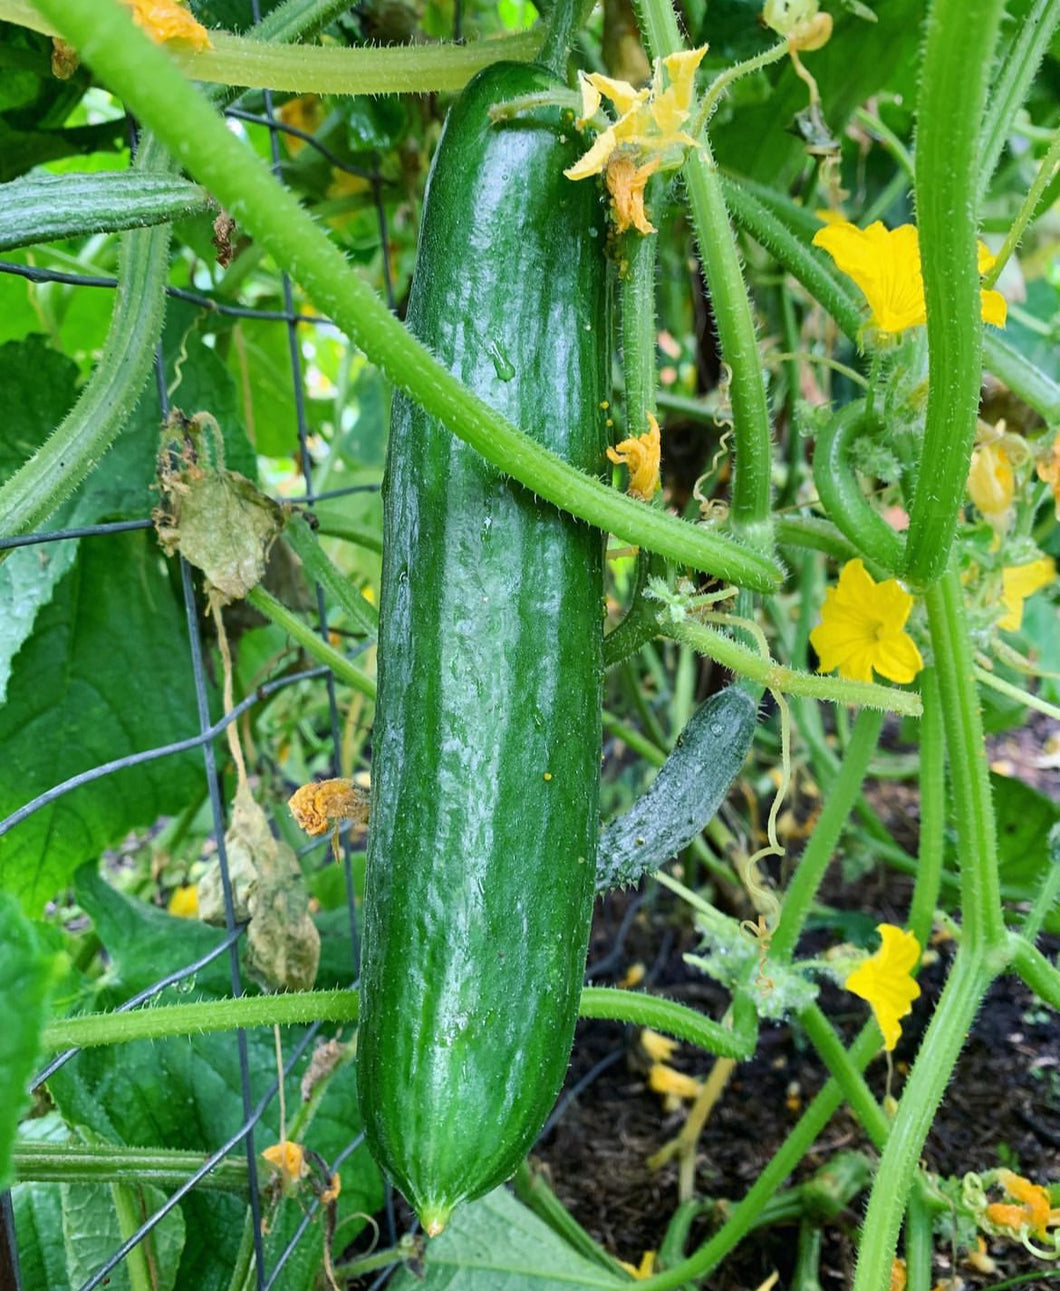 Beit Alpha Parthenocarpic Cucumber